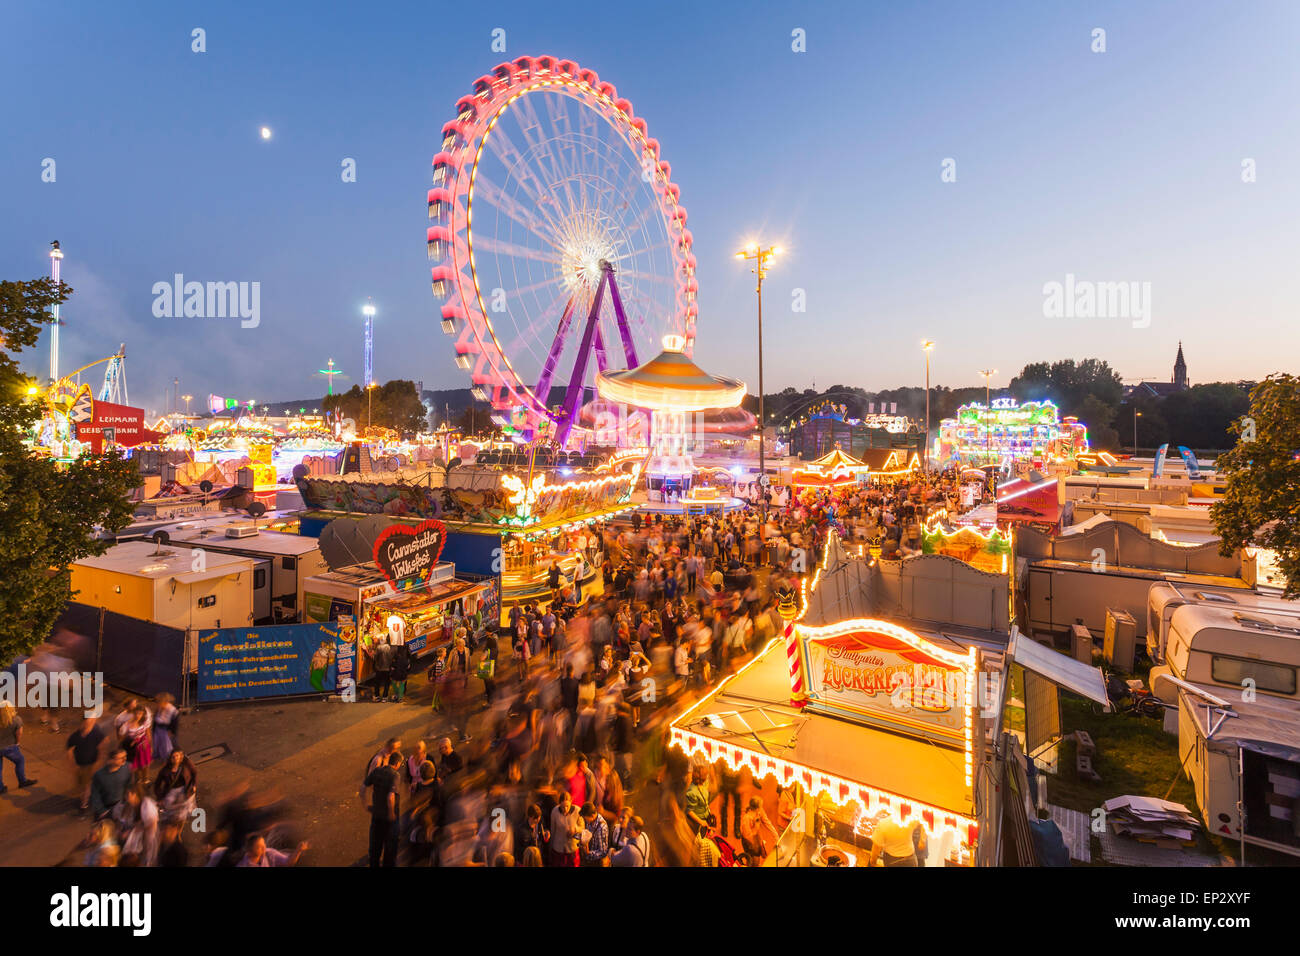 Germany, Stuttgart, Cannstatter Wasen fairground at night Stock Photo